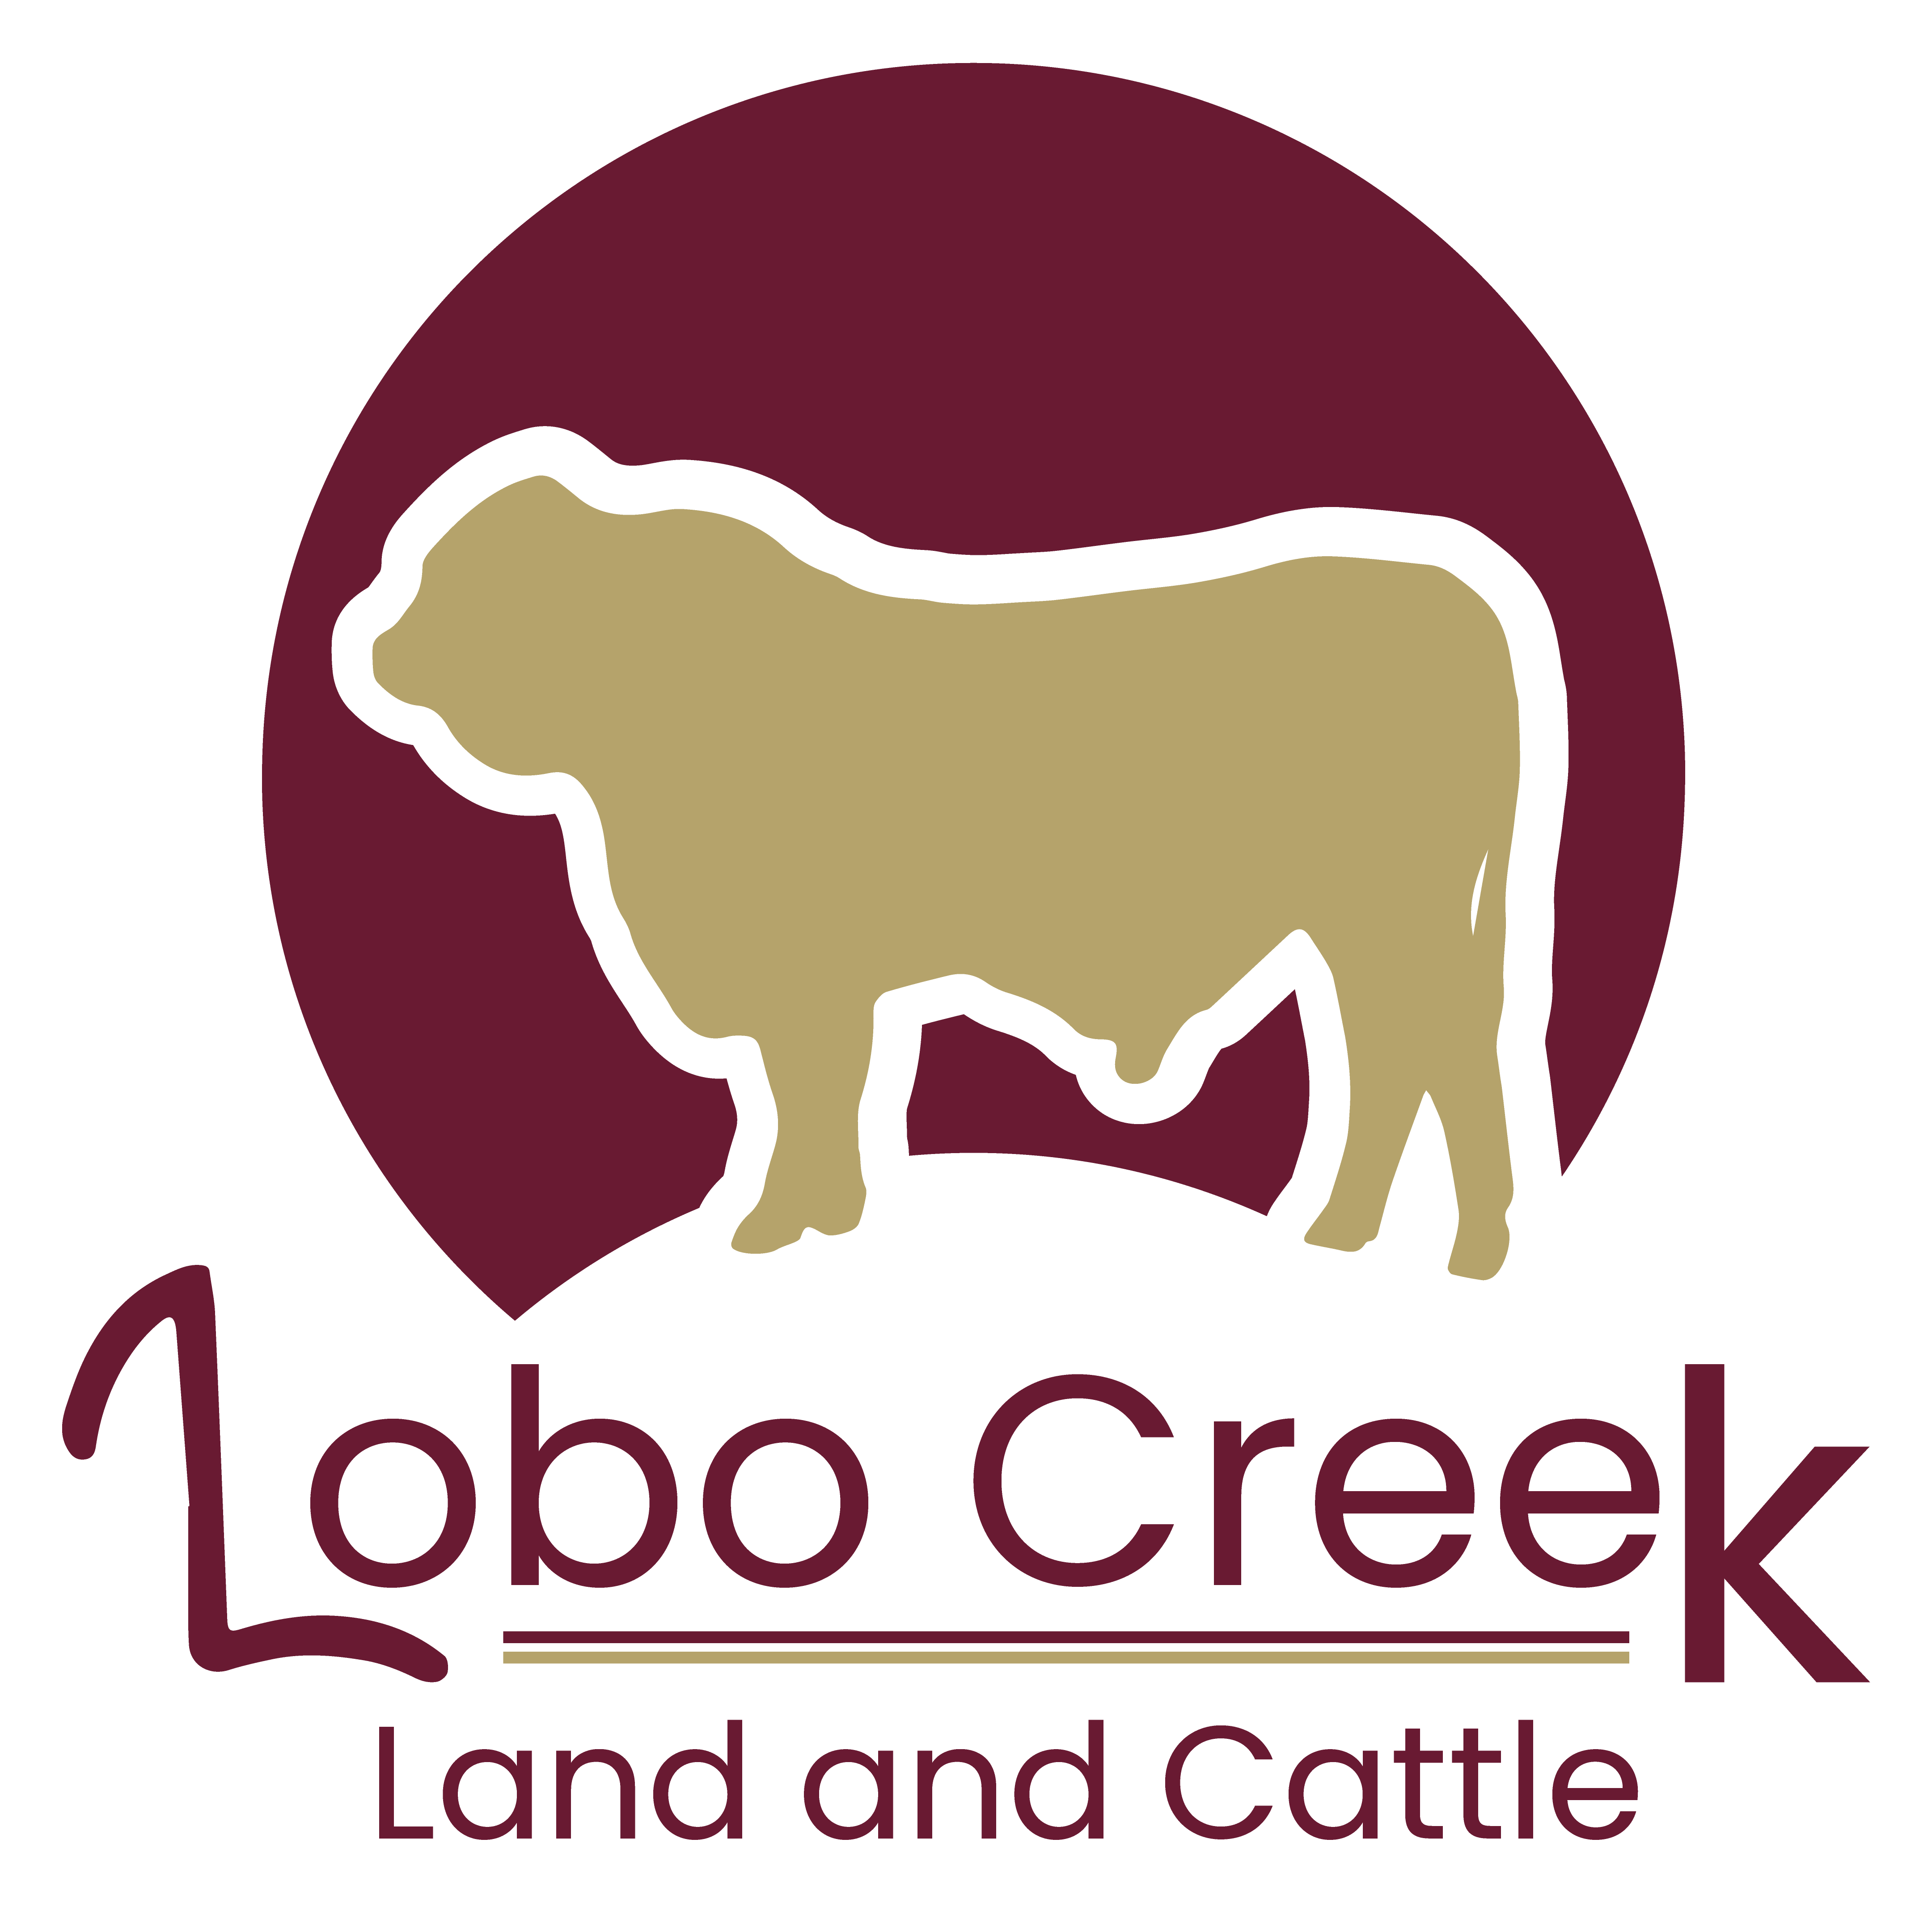 Wolf Creek Logo 01